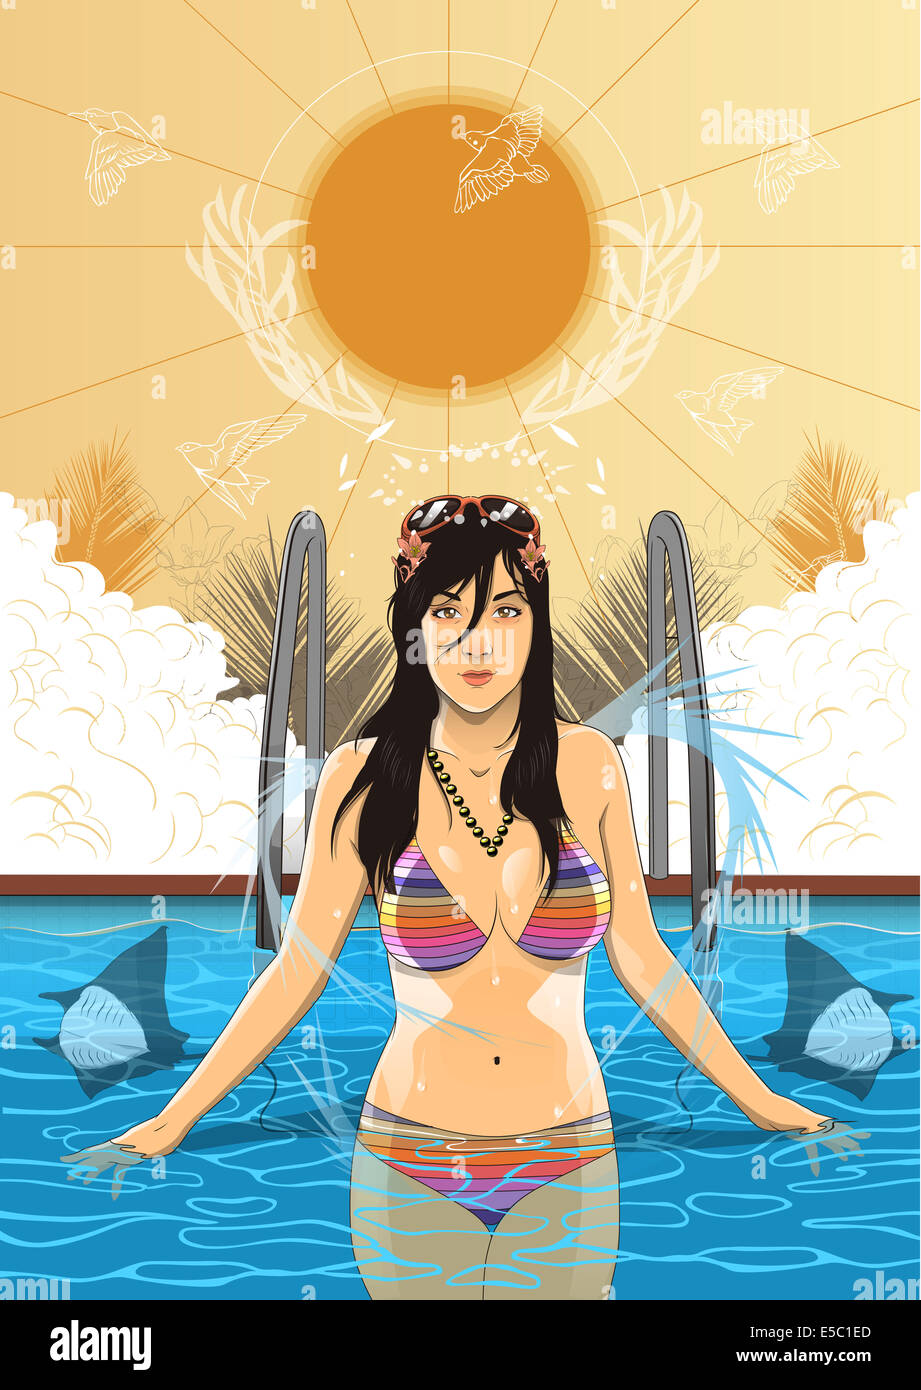 Illustration of attractive young woman girl wearing bikini standing in swimming pool Stock Photo